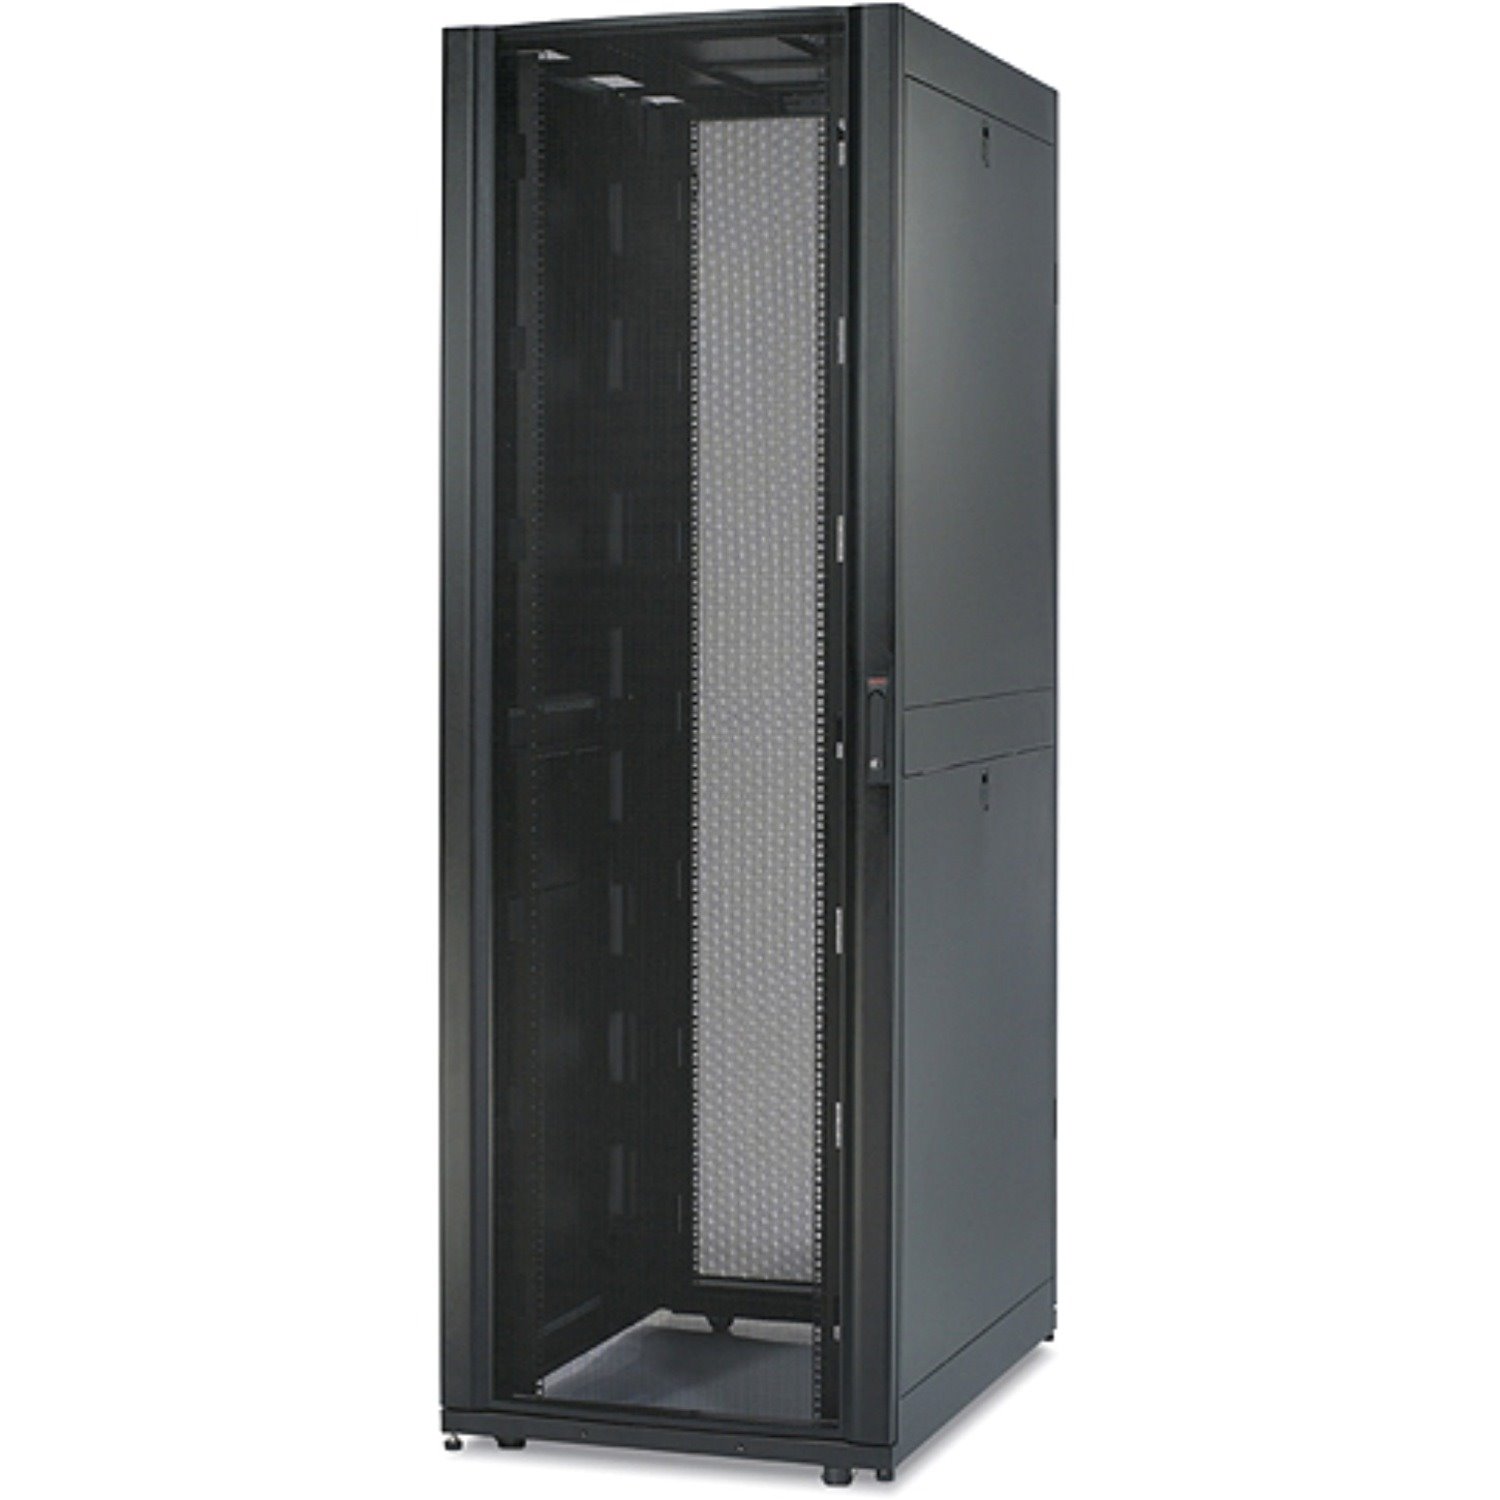 APC by Schneider Electric Netshelter SX, Server Rack Enclosure